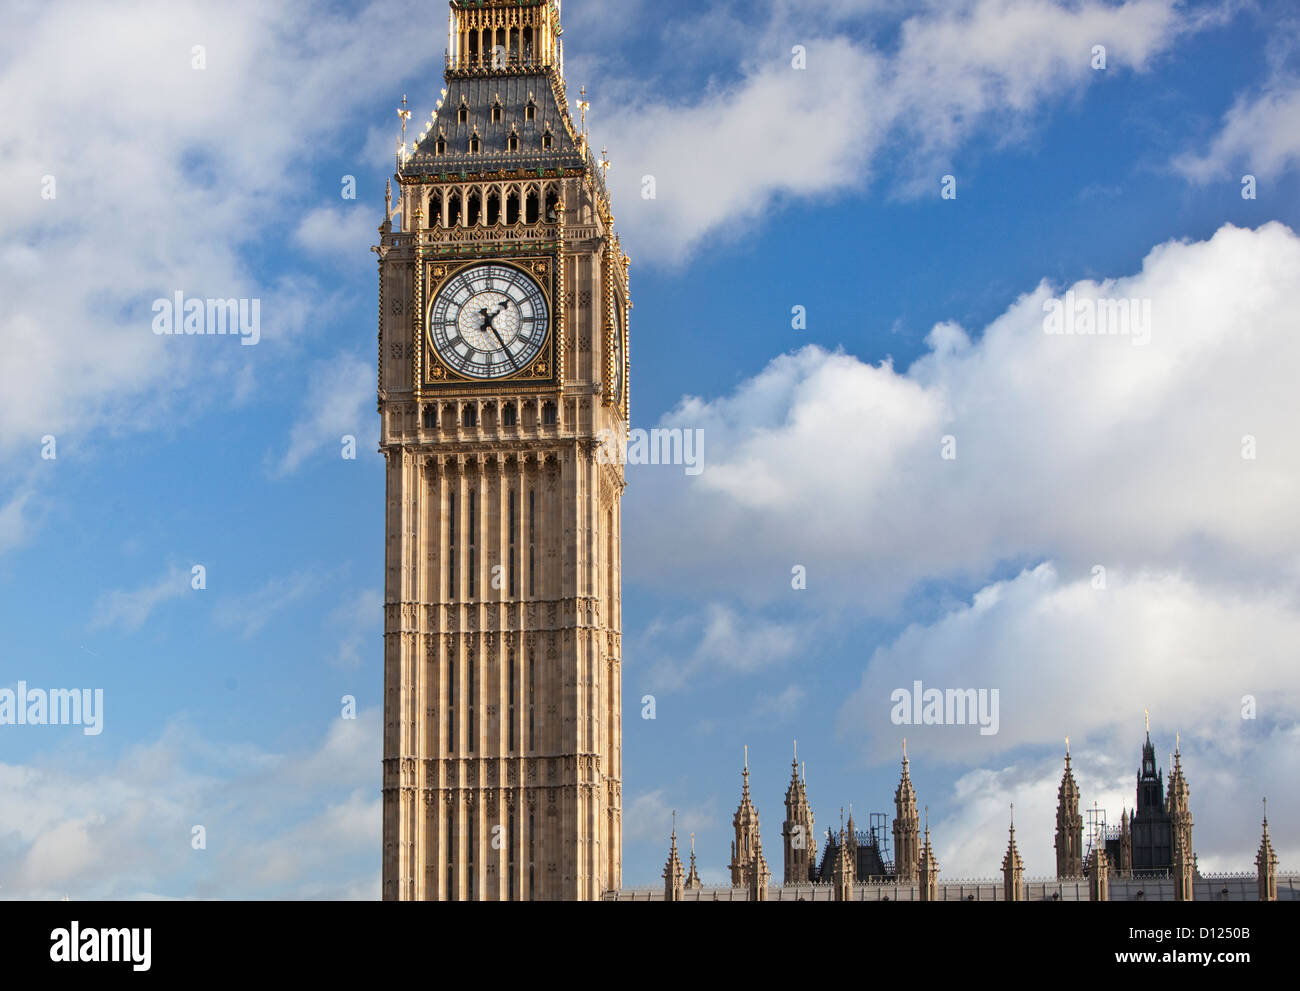 Elizabeth Tower (aka Big Ben) am nördlichen Ende des Palace of Westminster, London, England, UK. Stockfoto